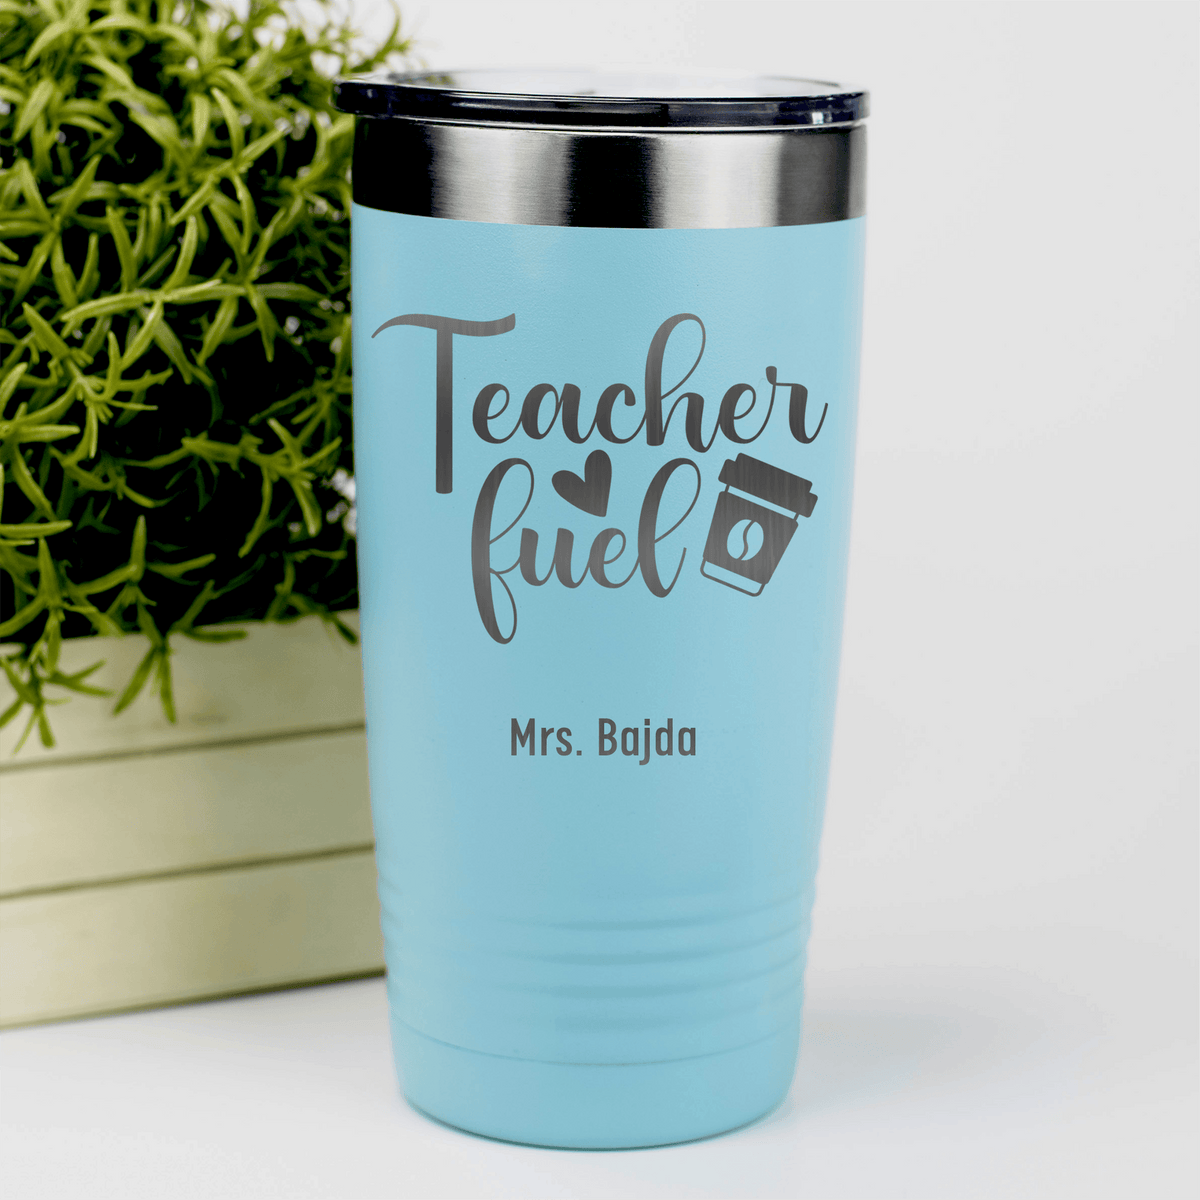 Teal Teacher Tumbler With Coffee Teacher Fuel Design